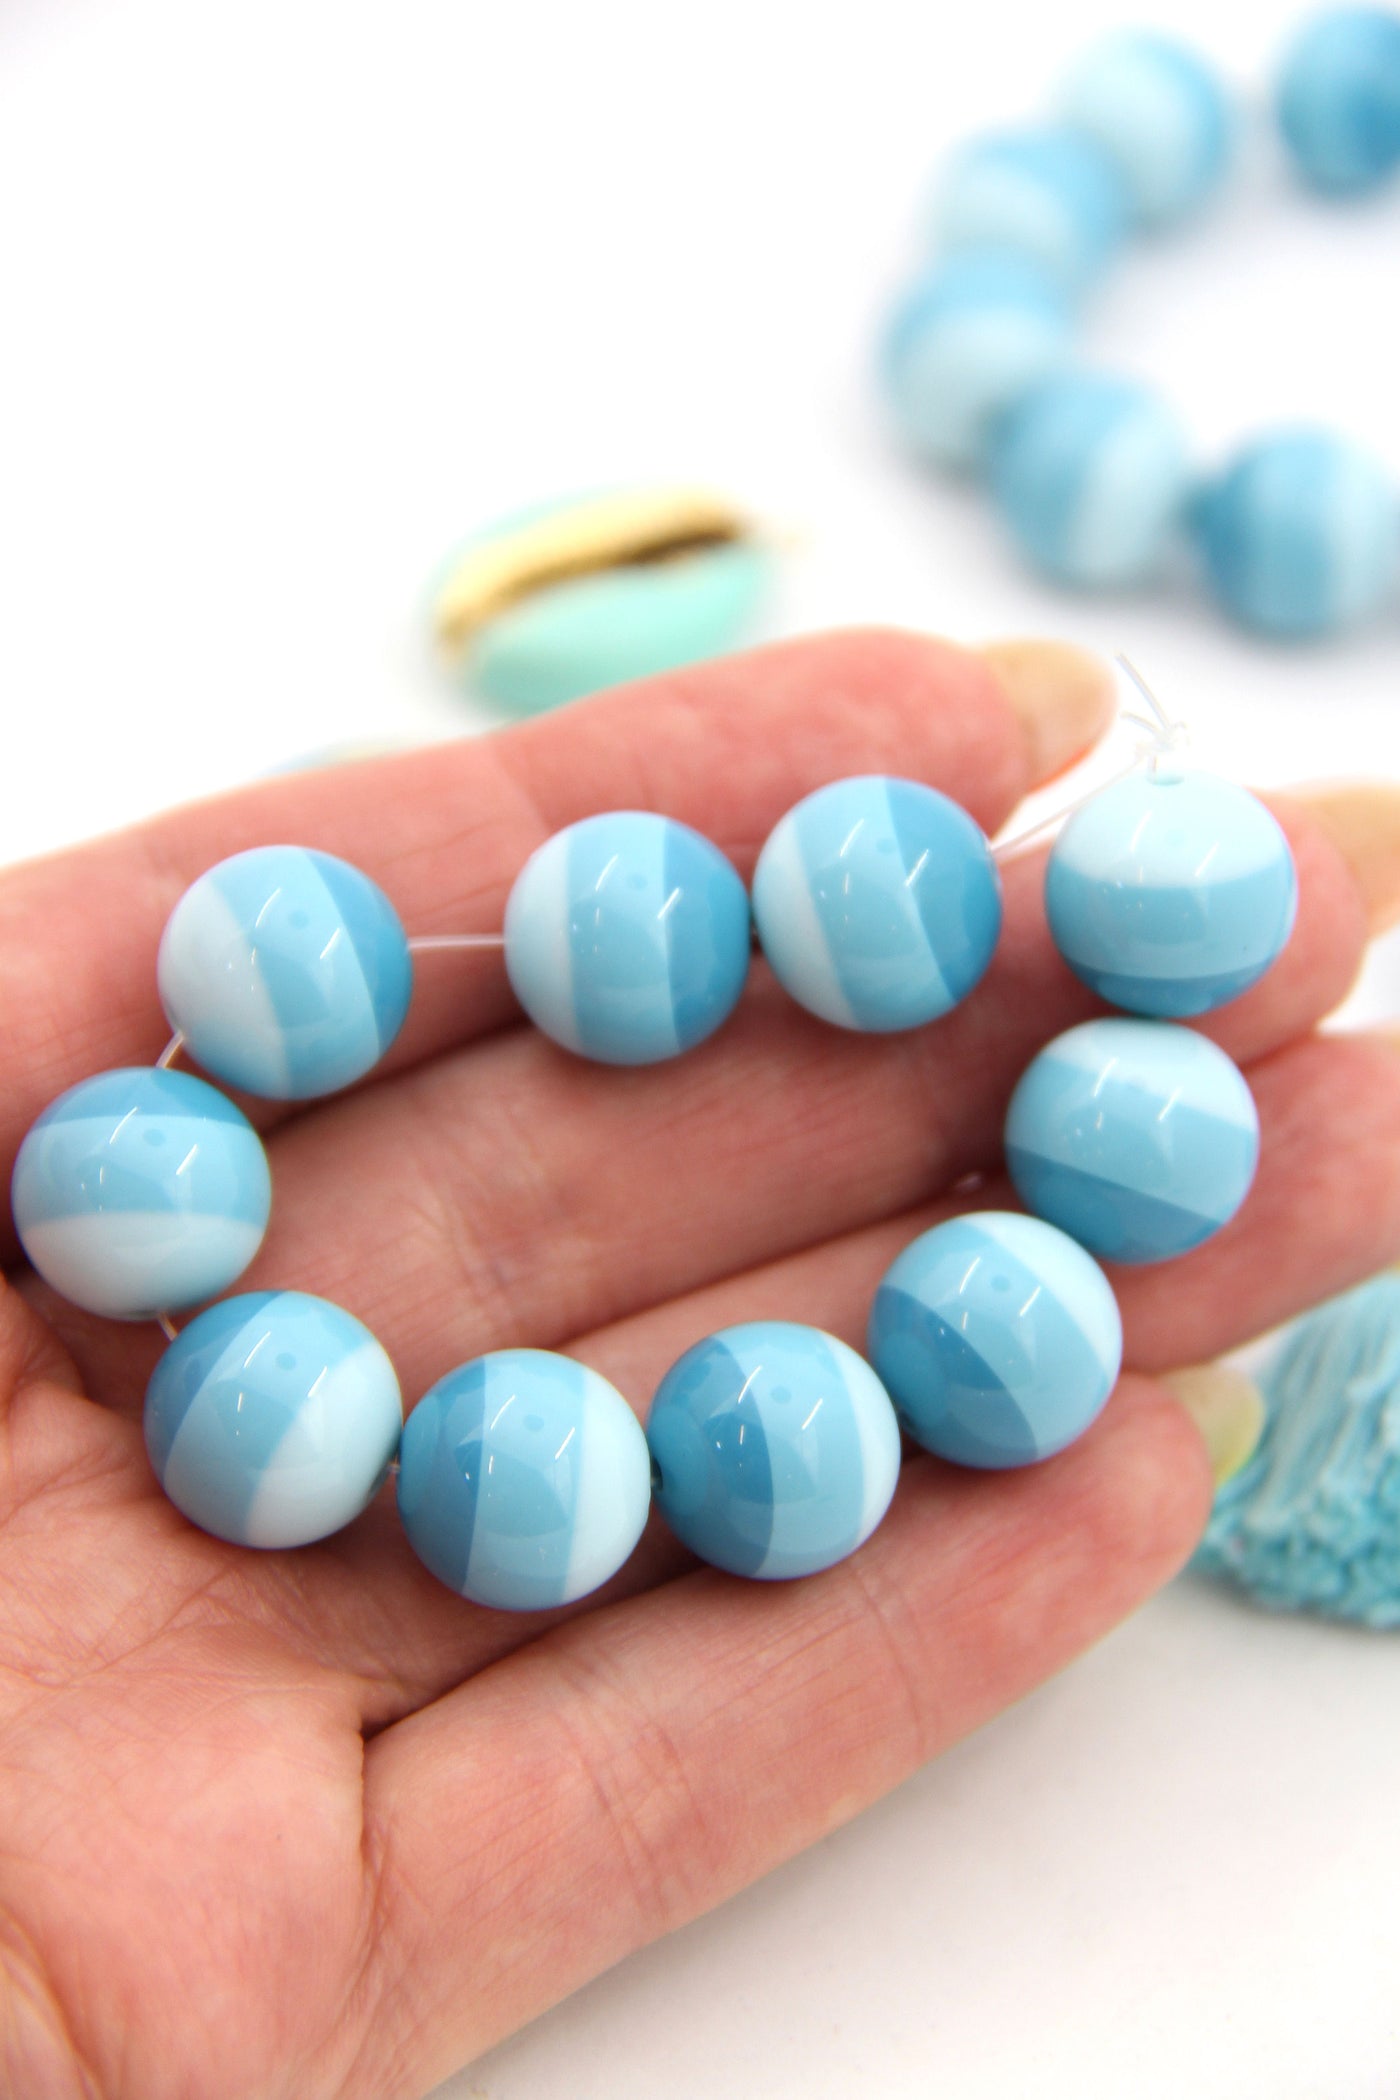 Blue Striped Italian Poly Resin Round Beads, 14mm, 10 Beads, Beachy DIY Jewelry